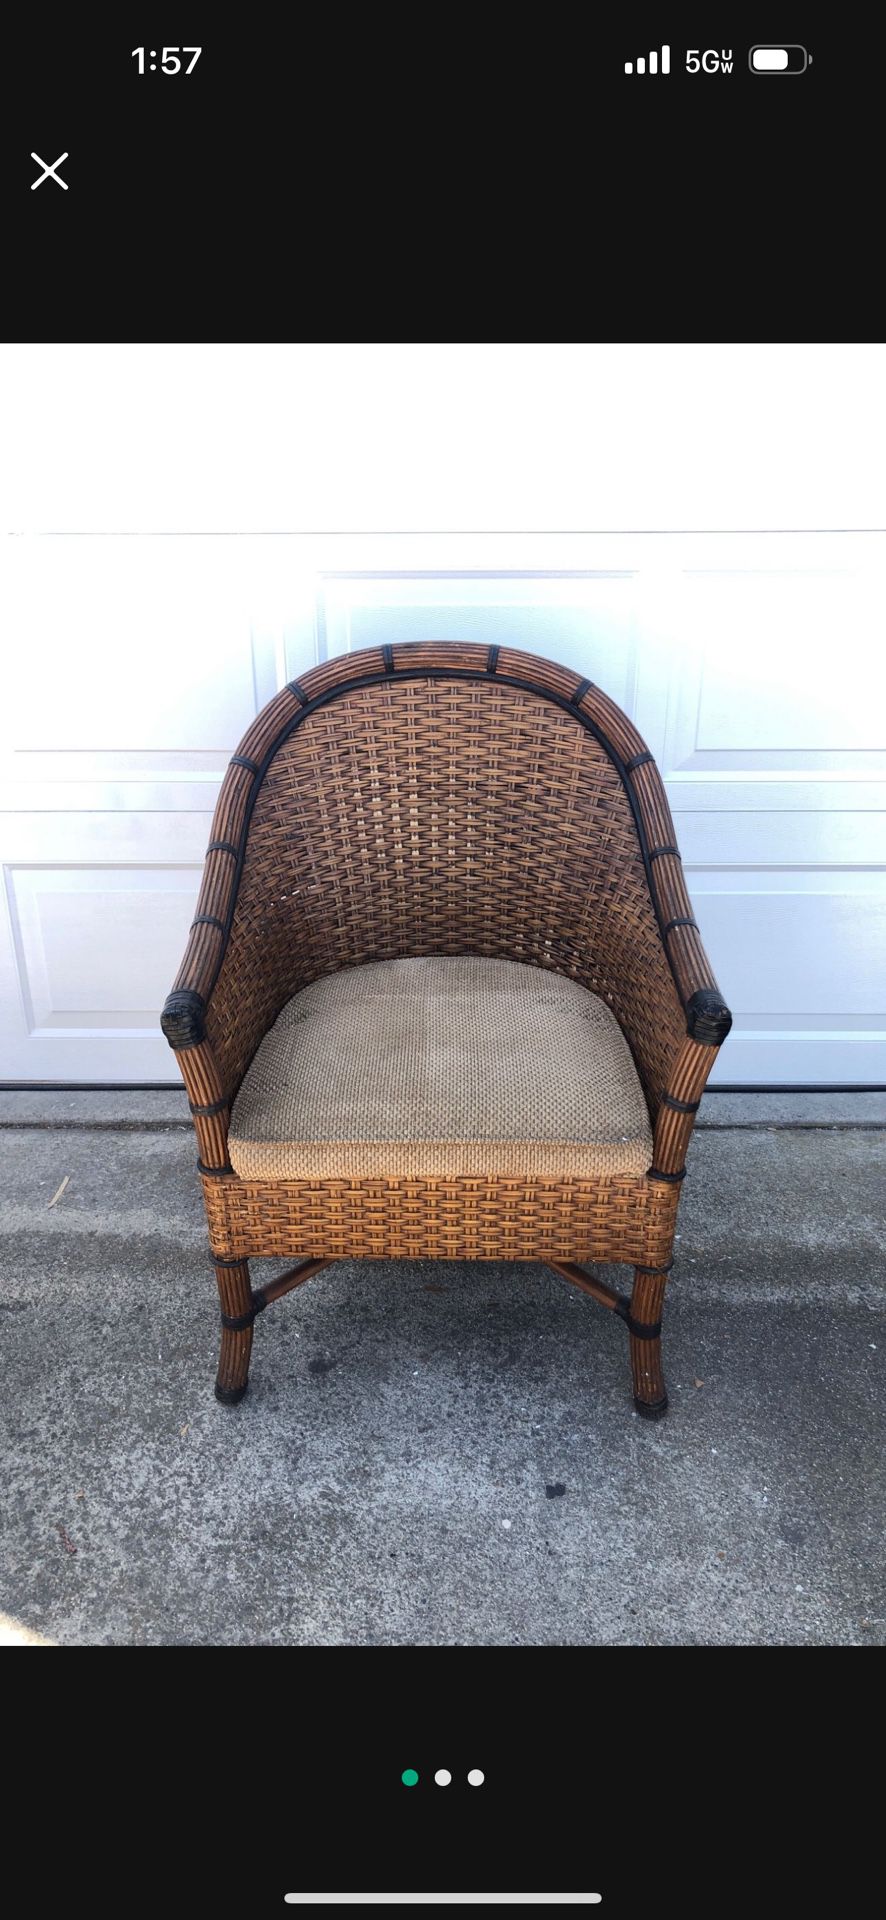 Rattan Vintage Chair